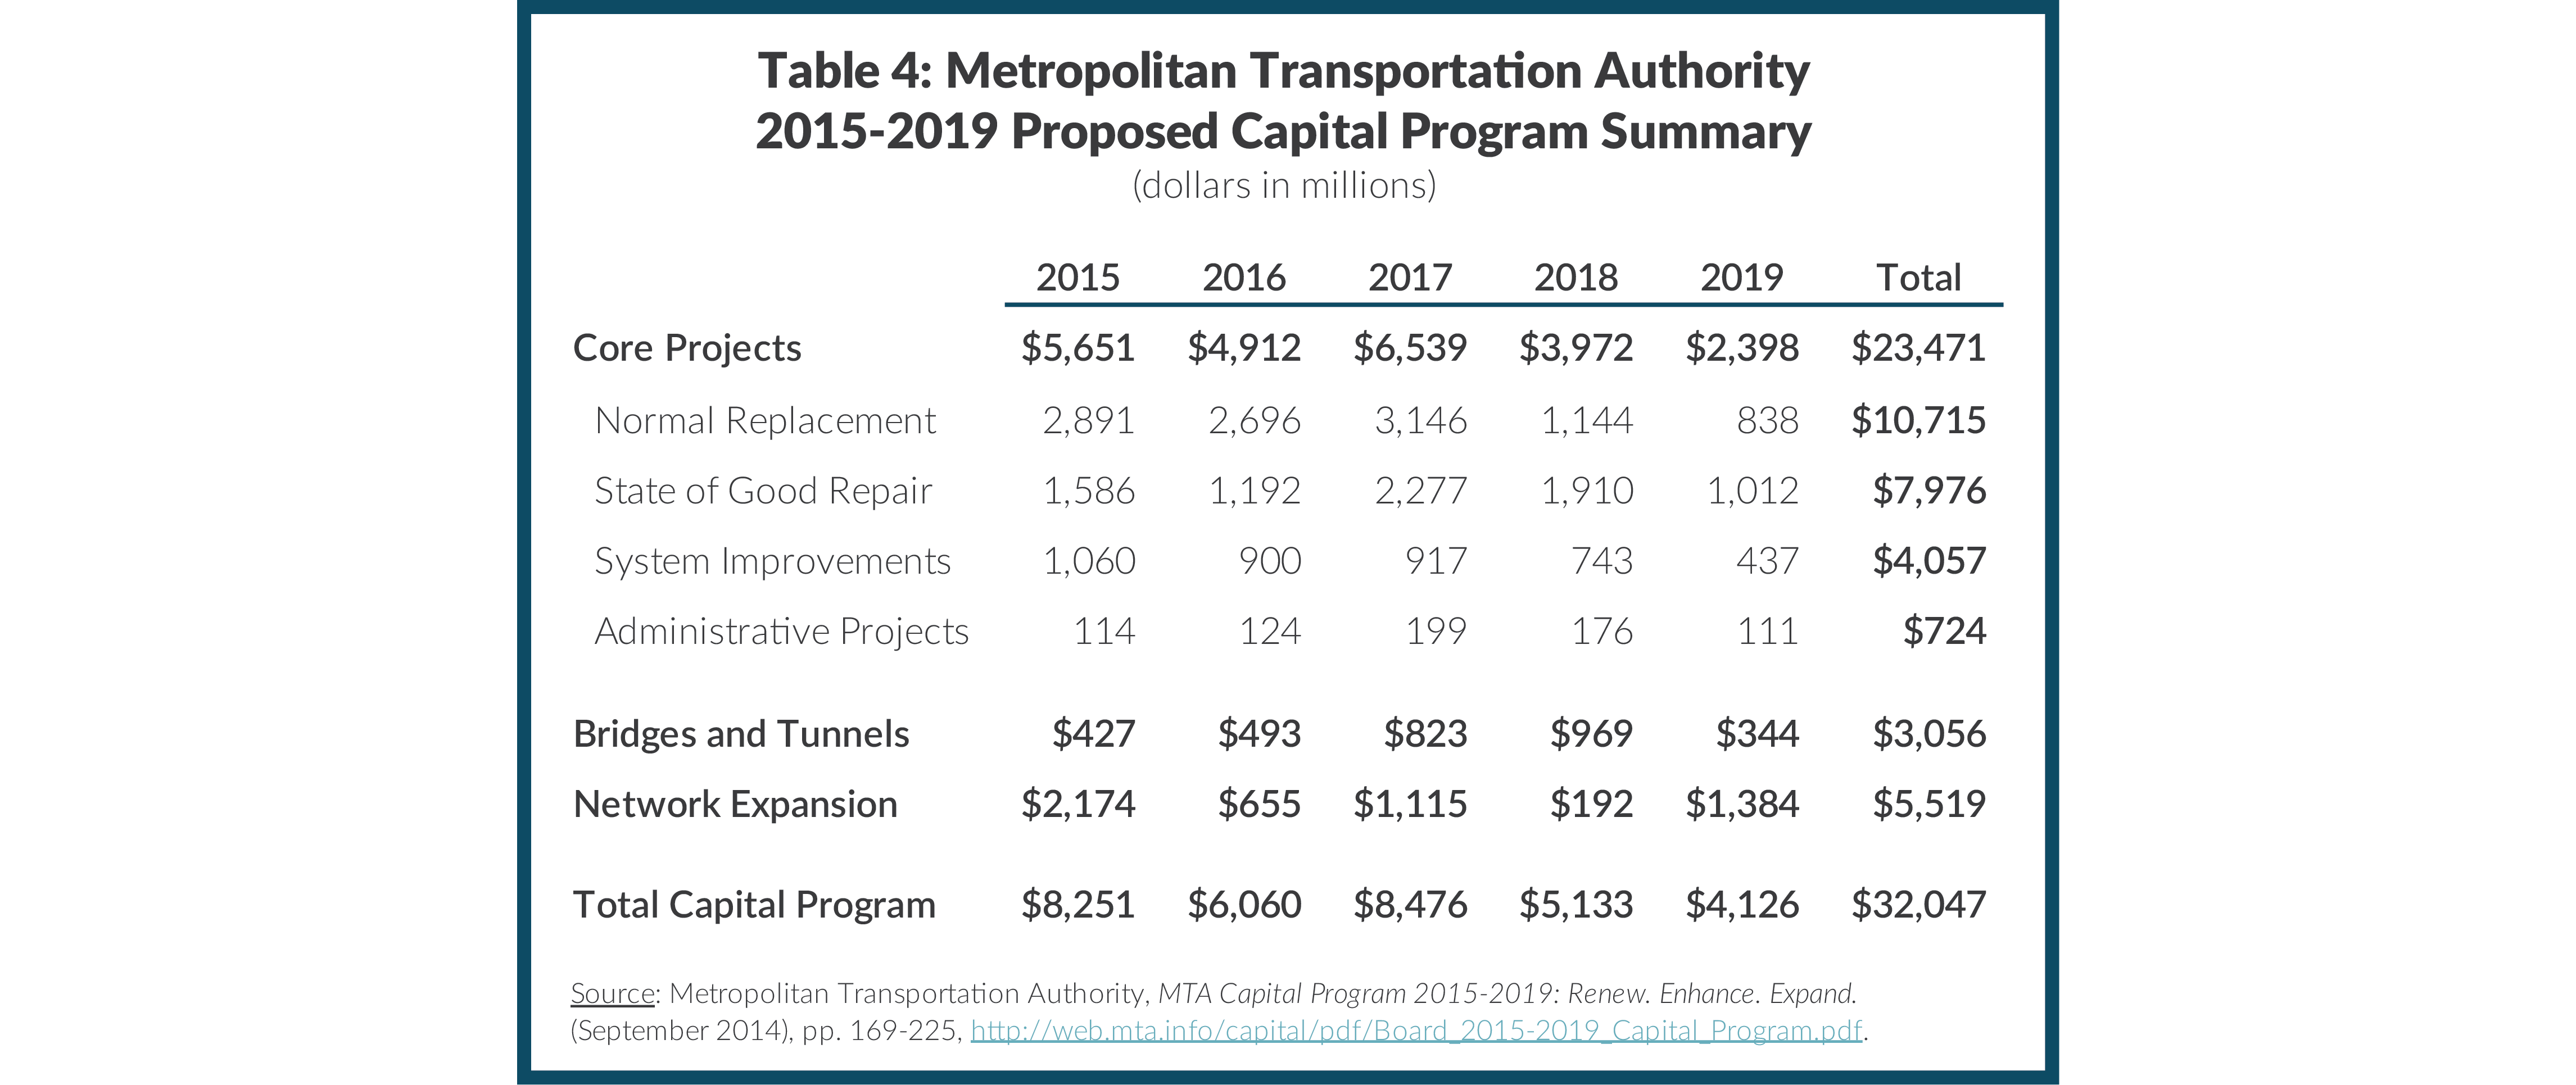 Table 4: Metropolitan Transportation Authority 2015-2019 Proposed Capital Program Summary